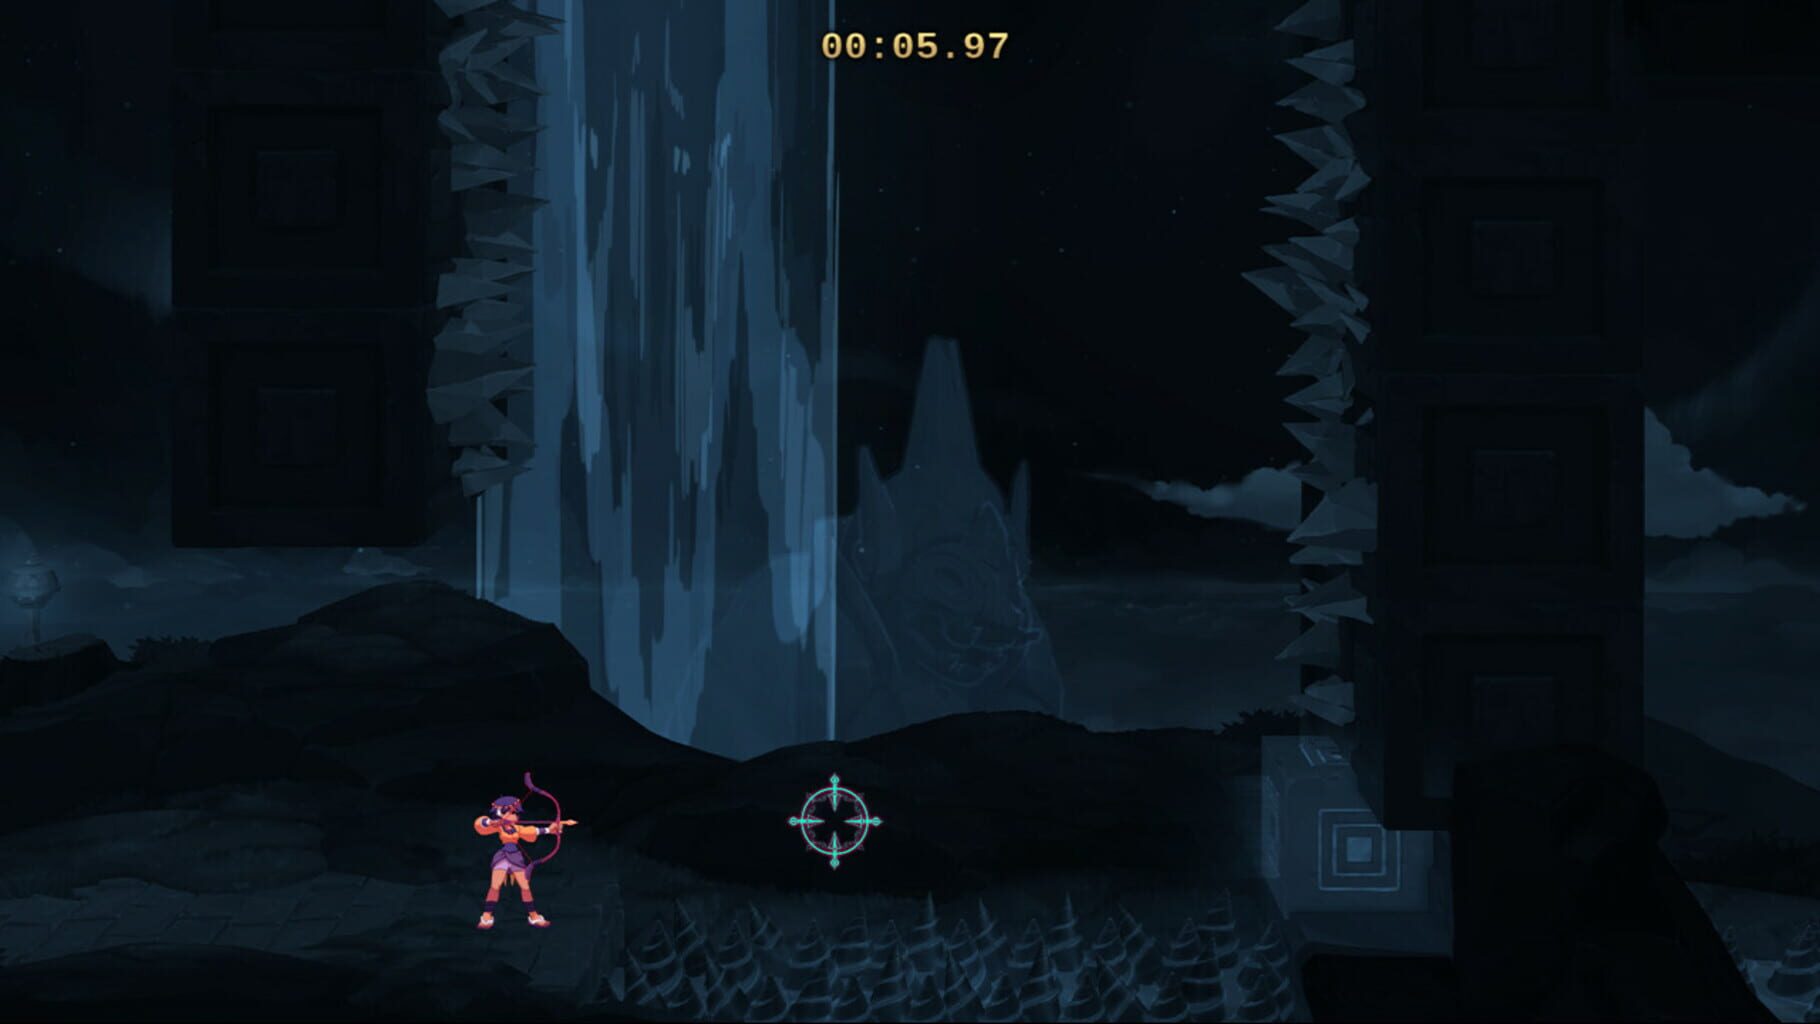 Indivisible: Razmi Challenges screenshot